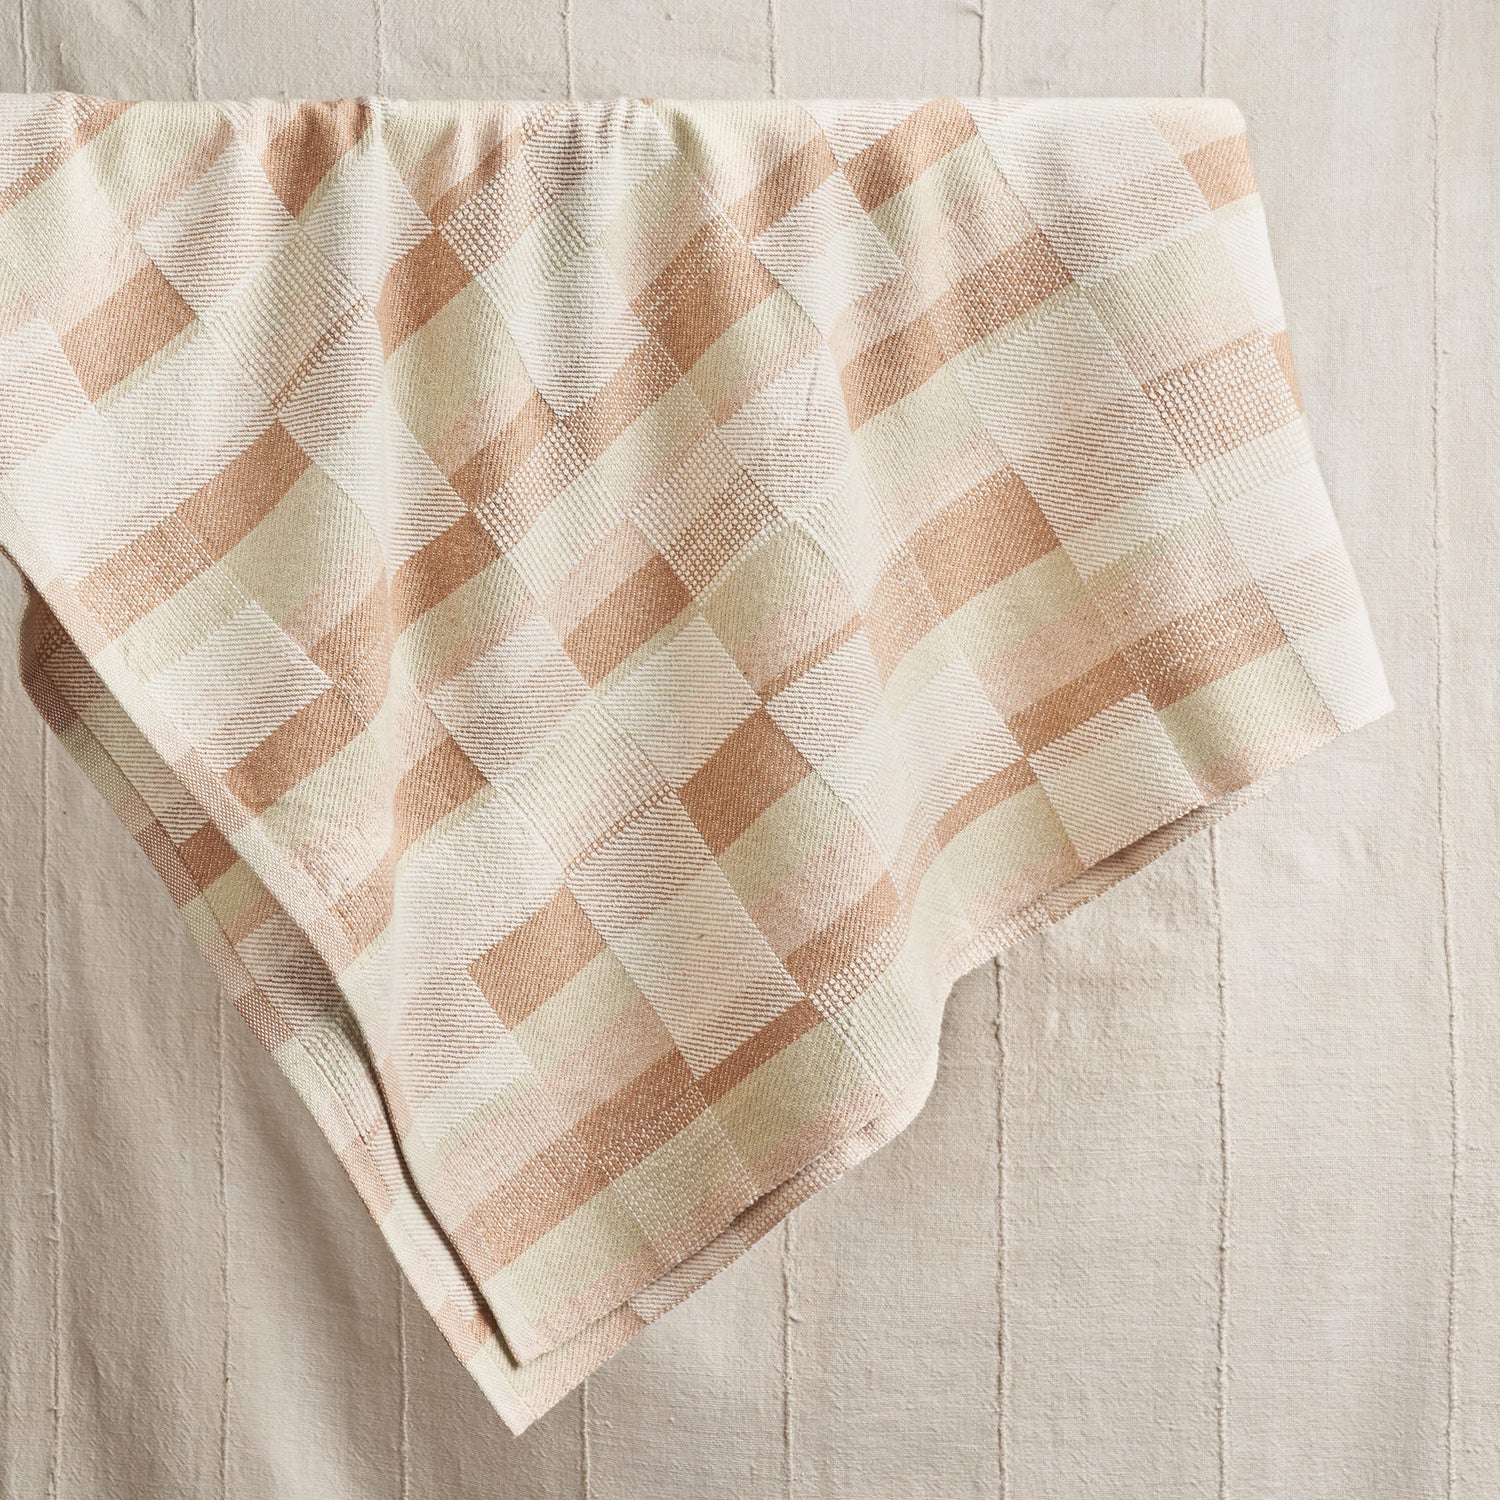 Cherub's Blanket Organic Cotton Hand Towels for Kitchen or Bath - Set